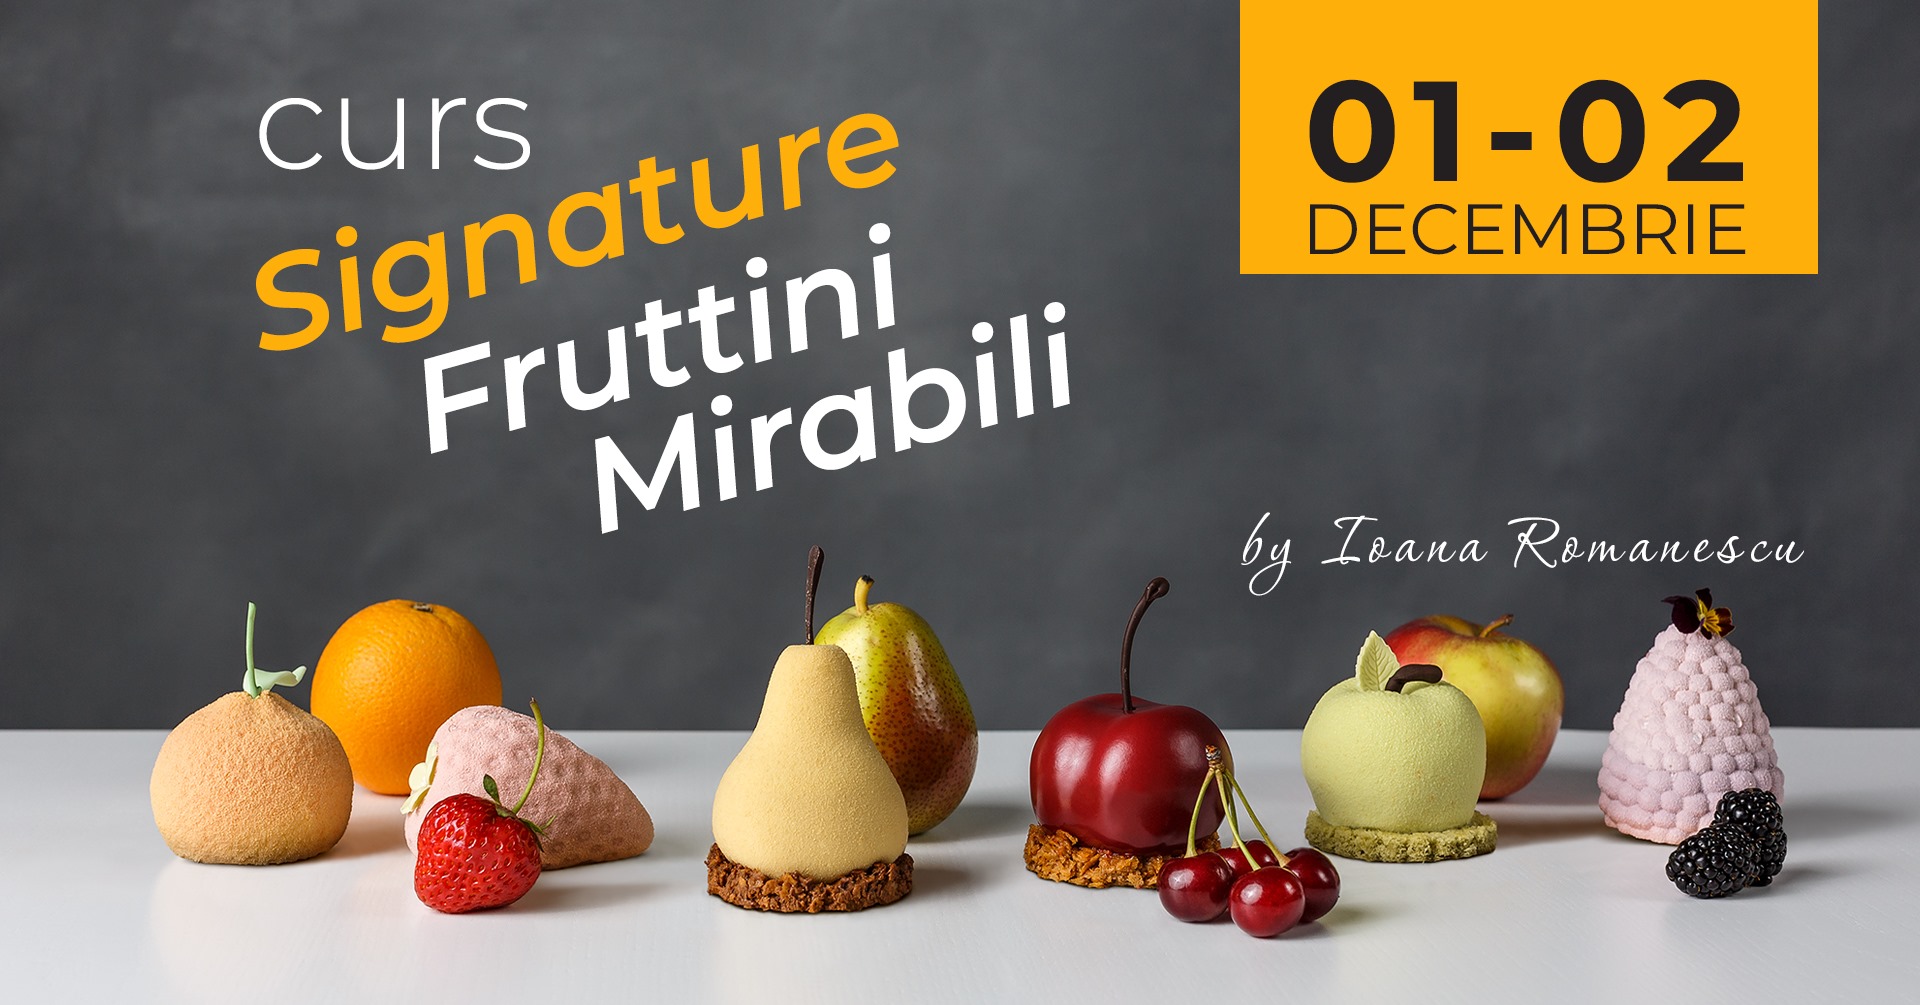 Signature Fruttini Mirabili